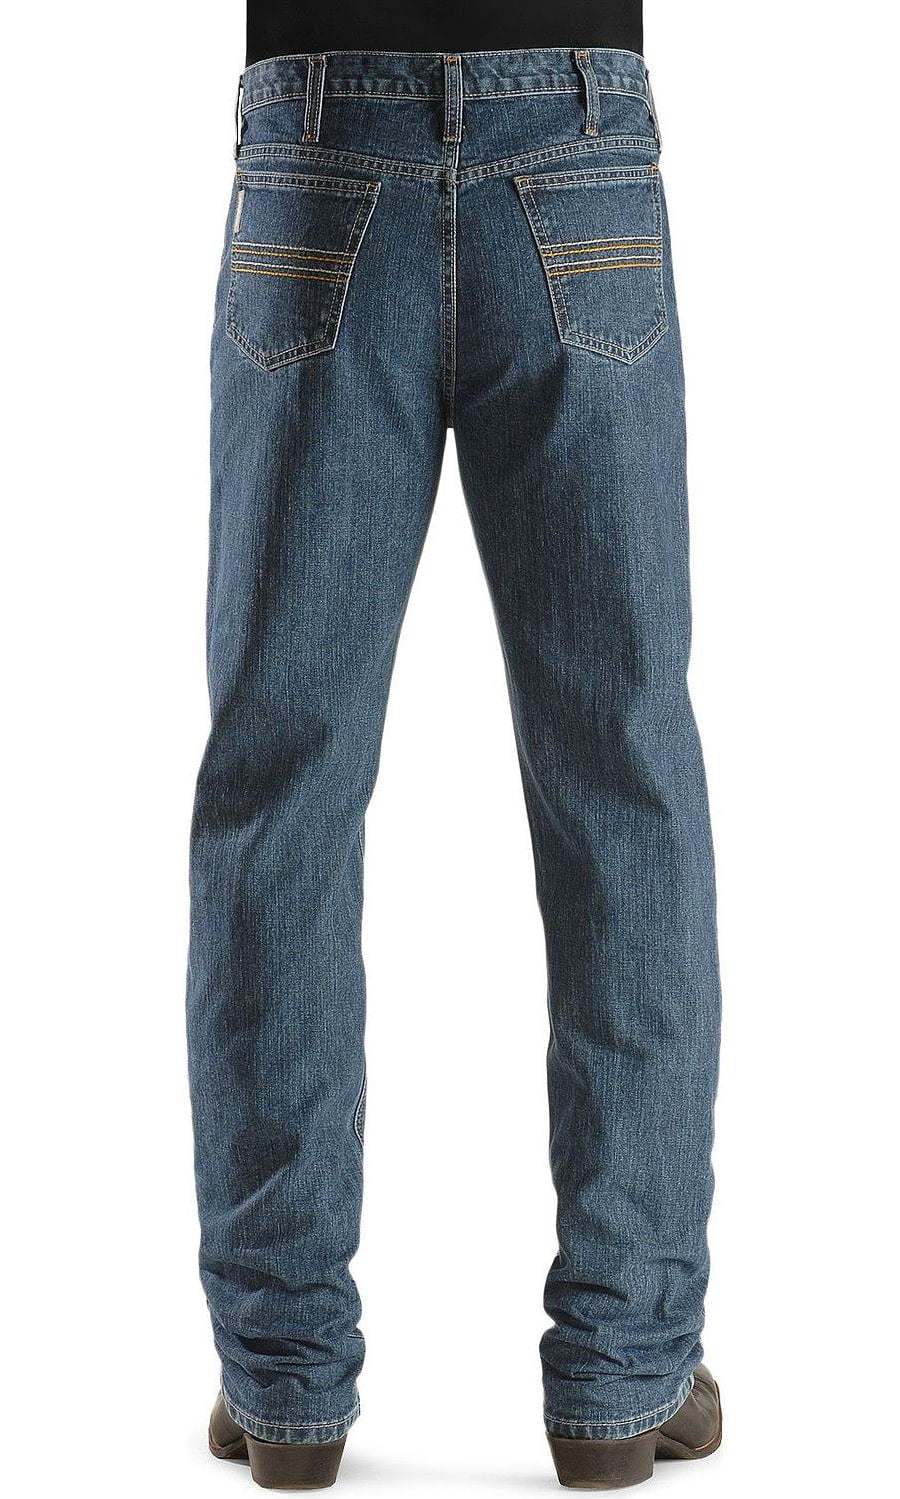 cinch men's silver label straight leg jeans - mb98034001 ind - Walmart.com